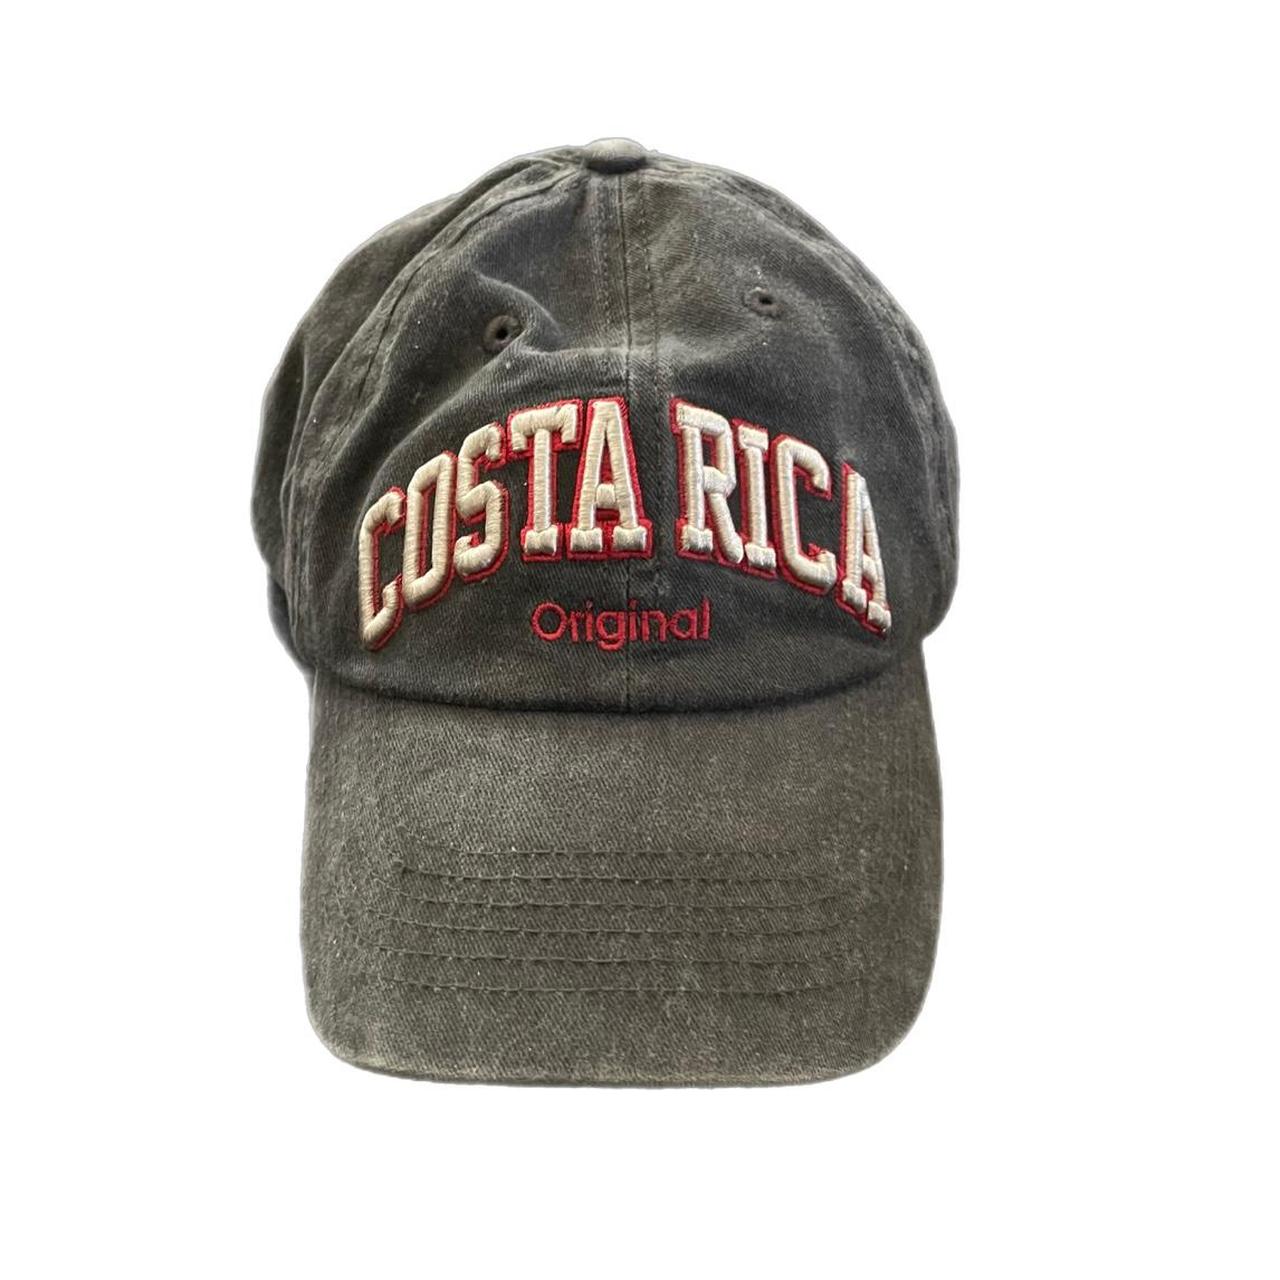 COSTA RICA HAT 🇨🇷 #hats #costarica #puravida #cap #hat - Depop